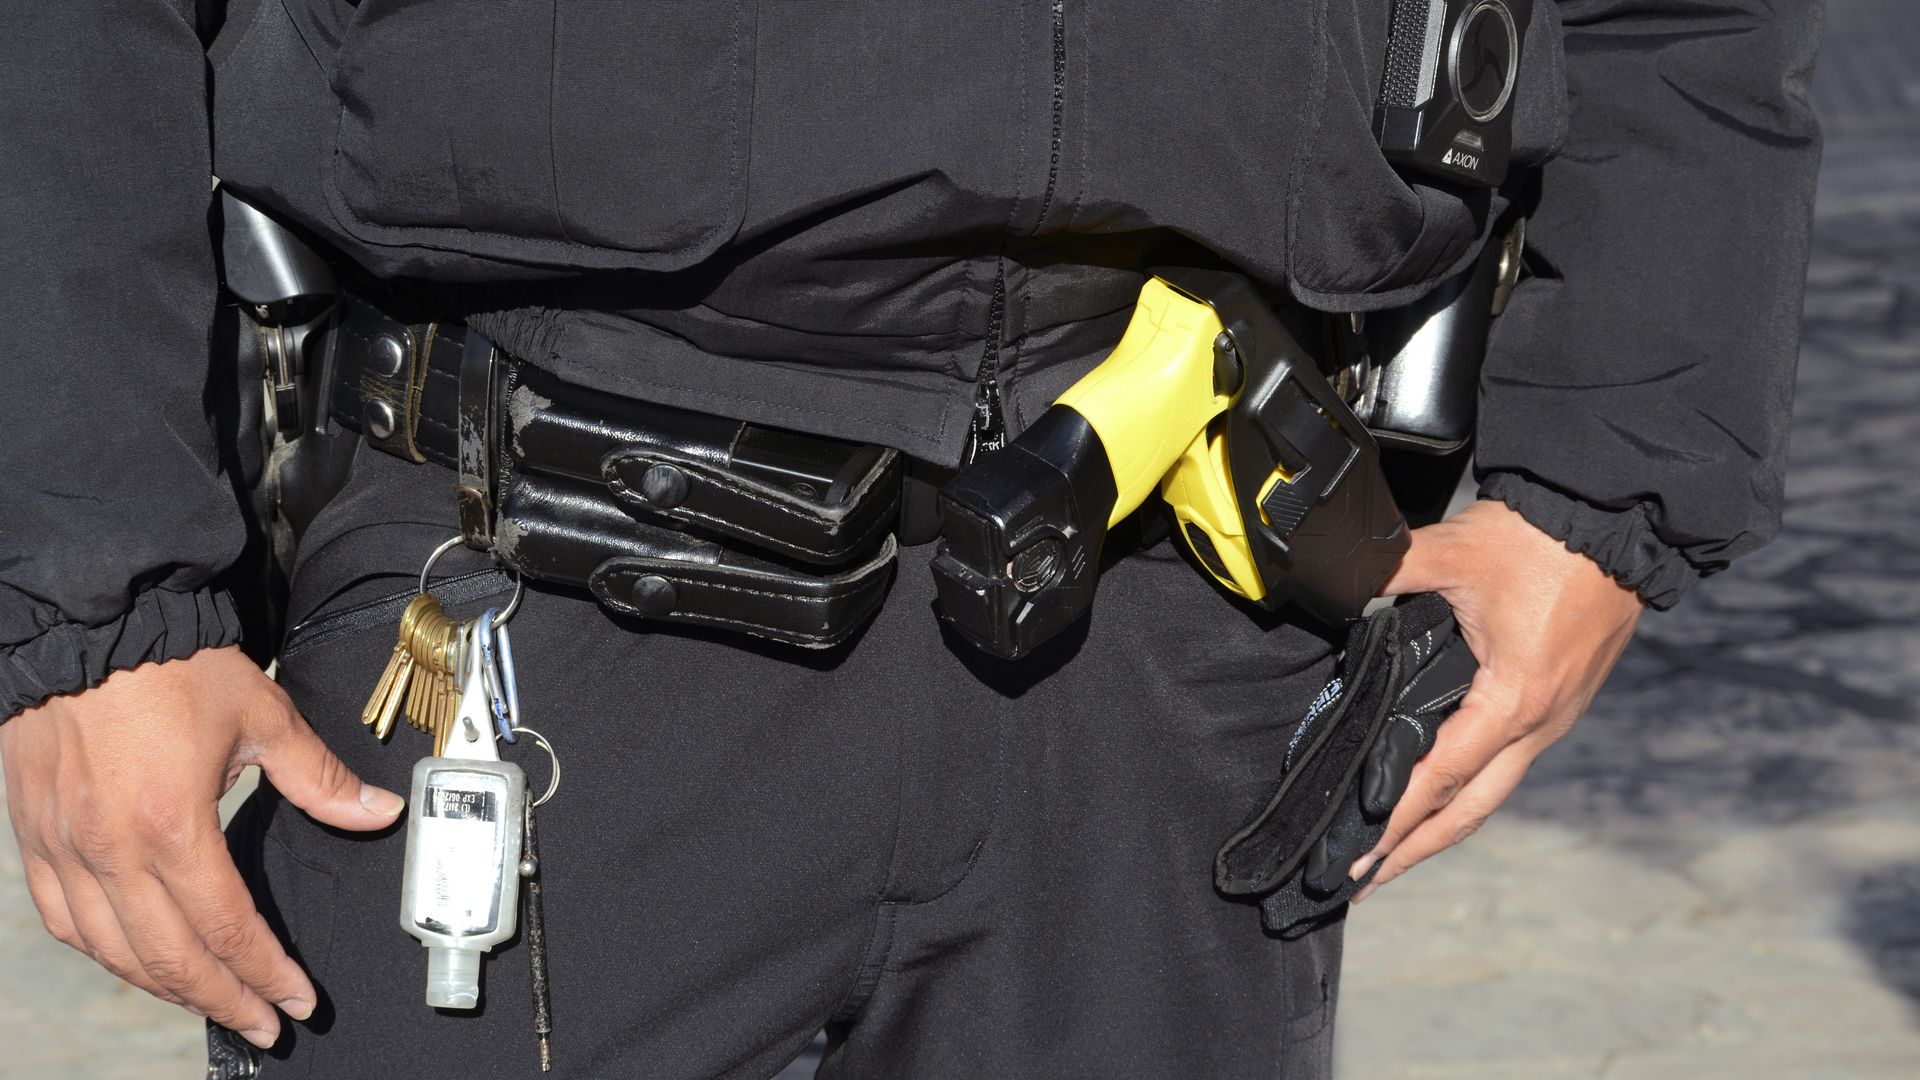 a yellow taser seen in an up close shot of a police officer's belt.